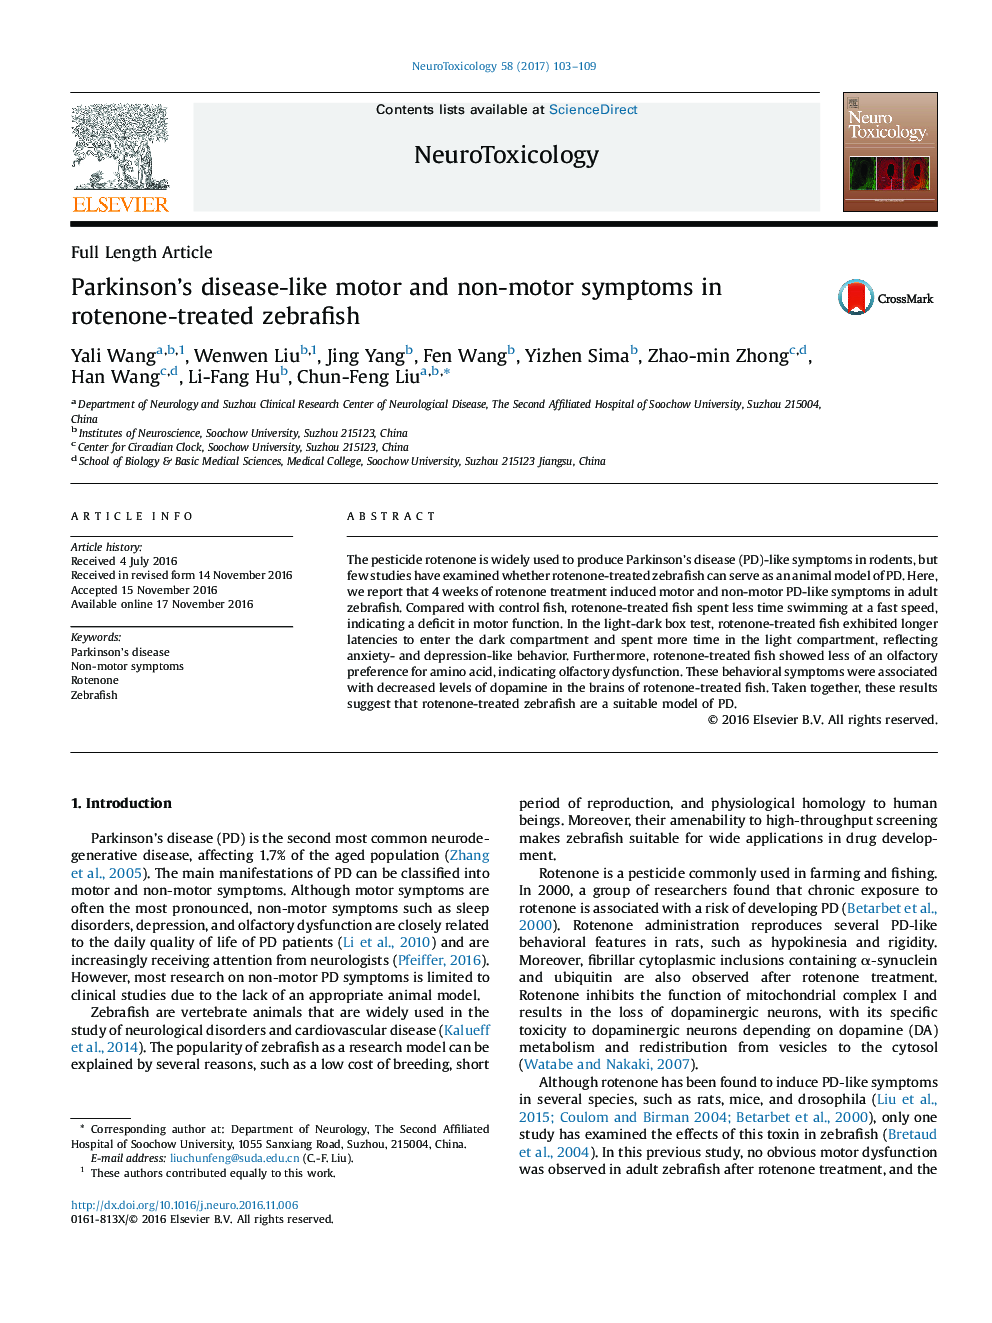 Parkinson's disease-like motor and non-motor symptoms in rotenone-treated zebrafish